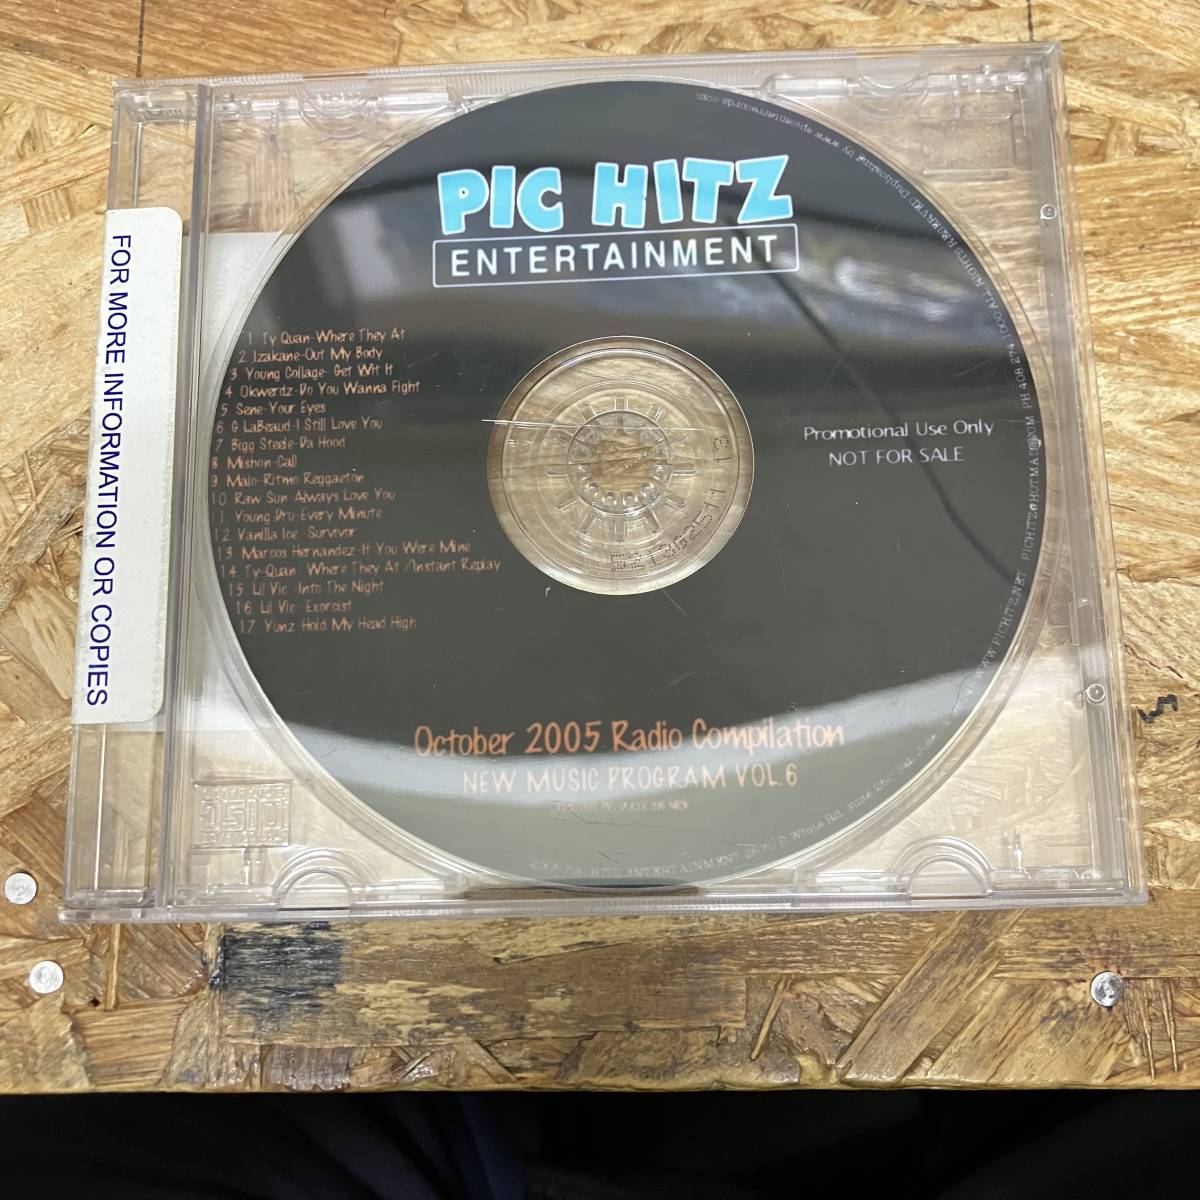 ◎ HIPHOP,R&B PIC HITZ ENTERTAINMENT アルバム,PROMO盤 CD 中古品_画像1